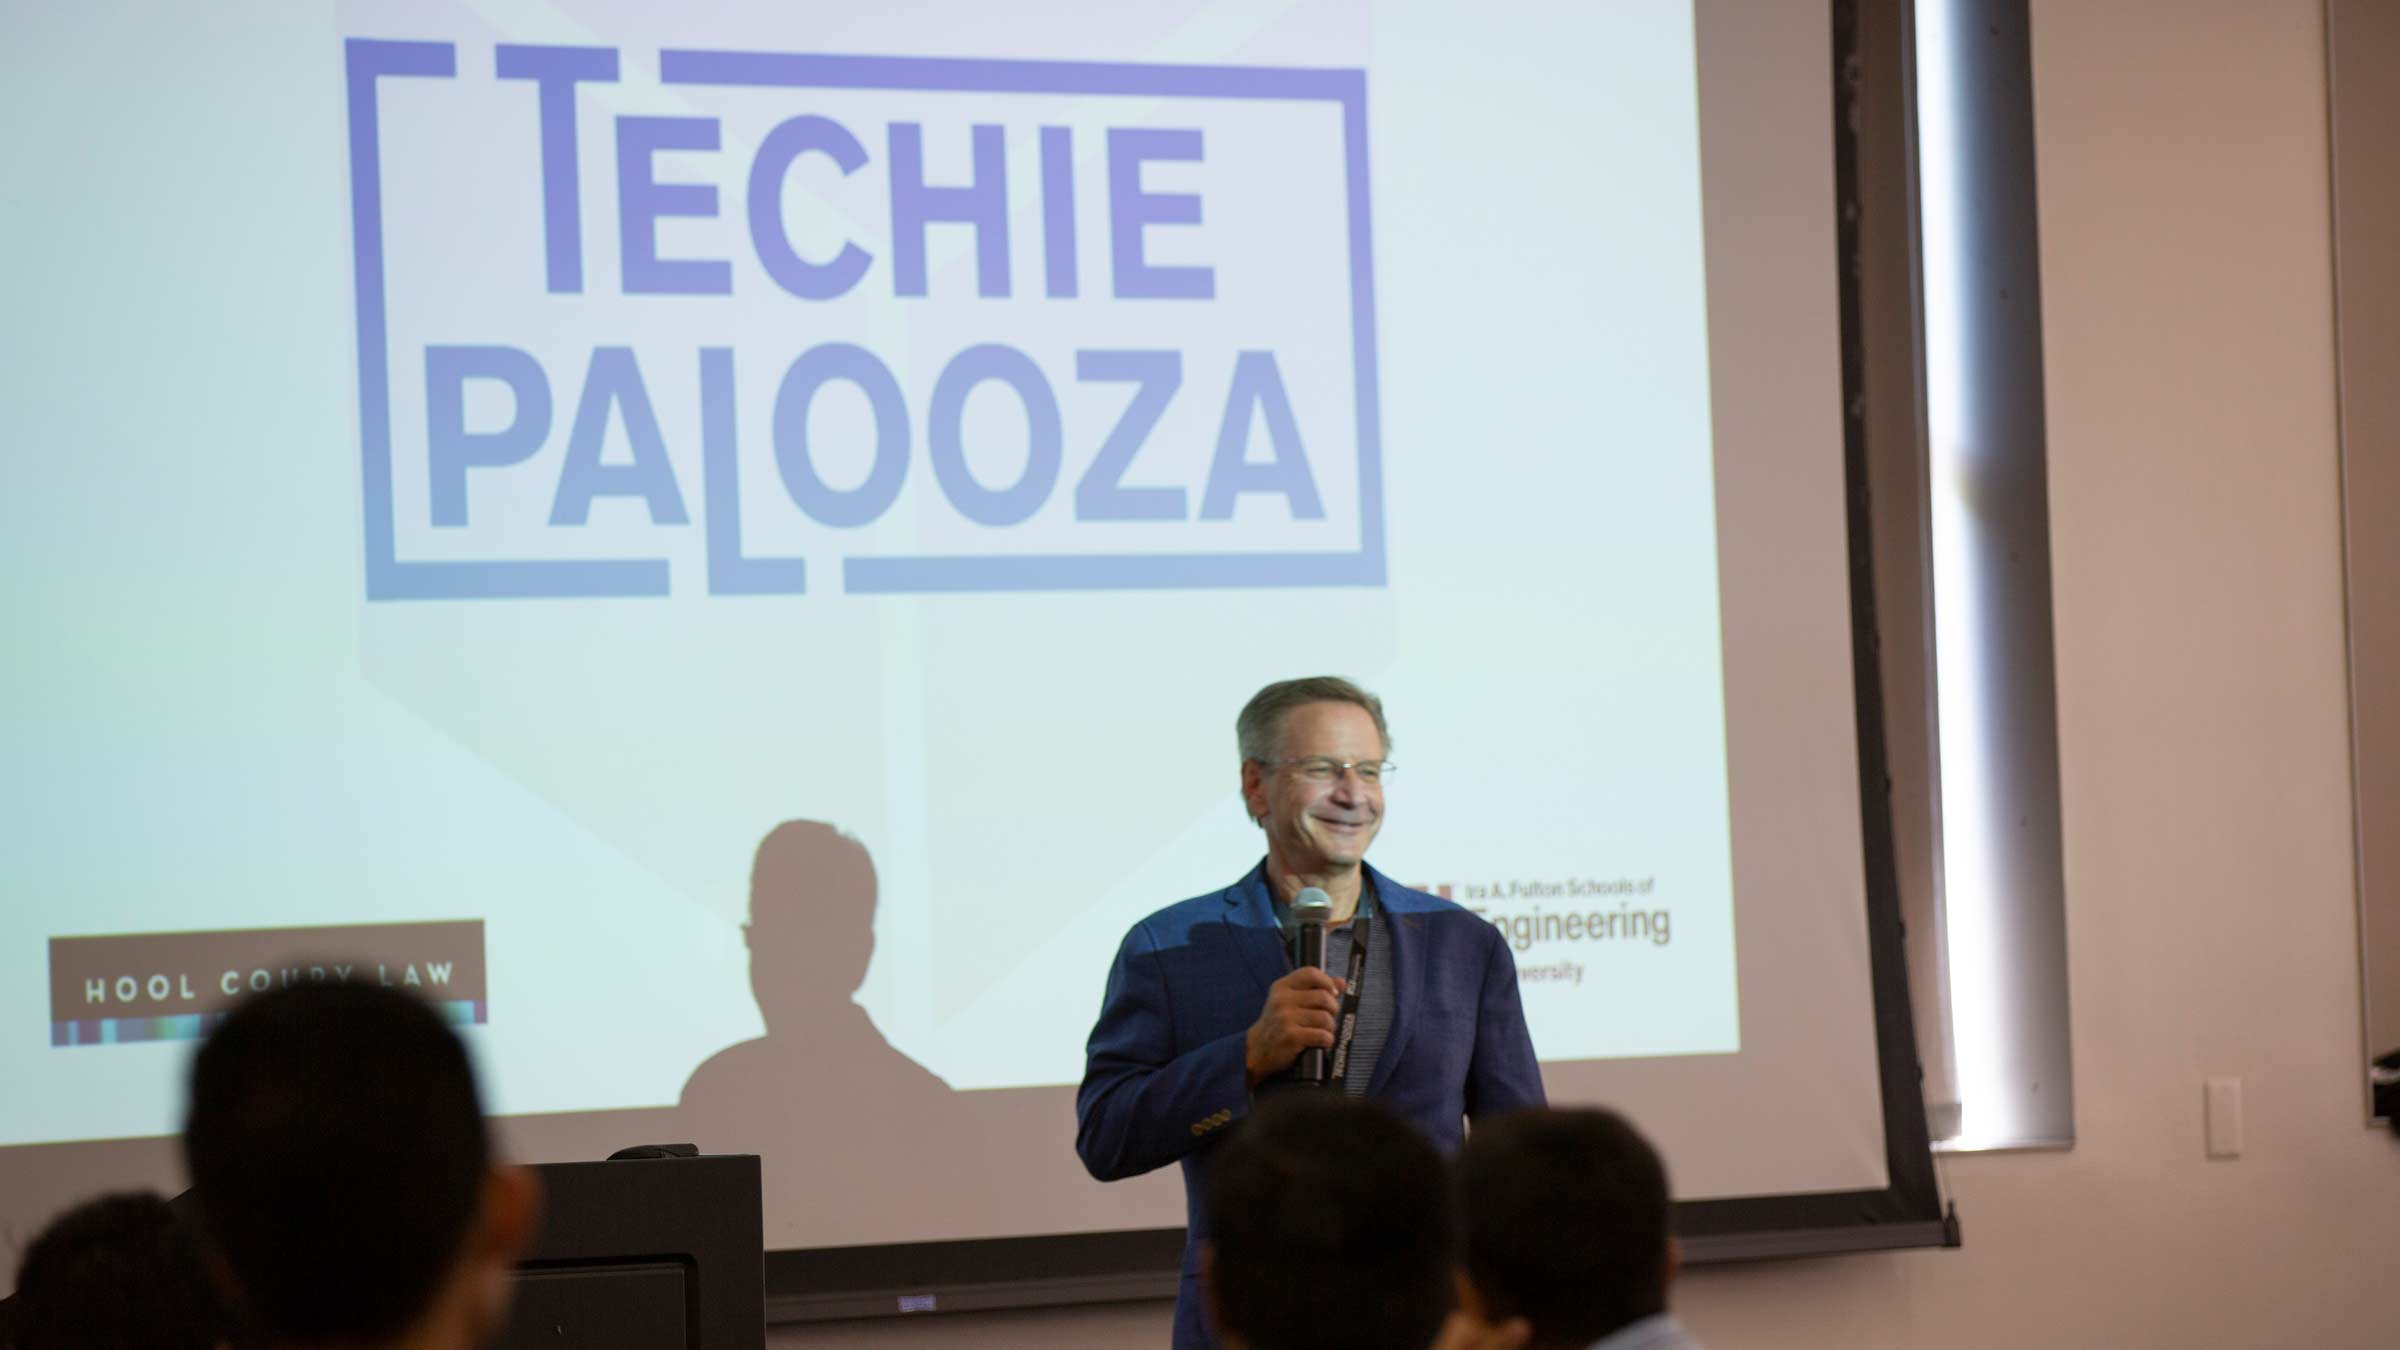 Michael Hool speaking at Techiepalooza